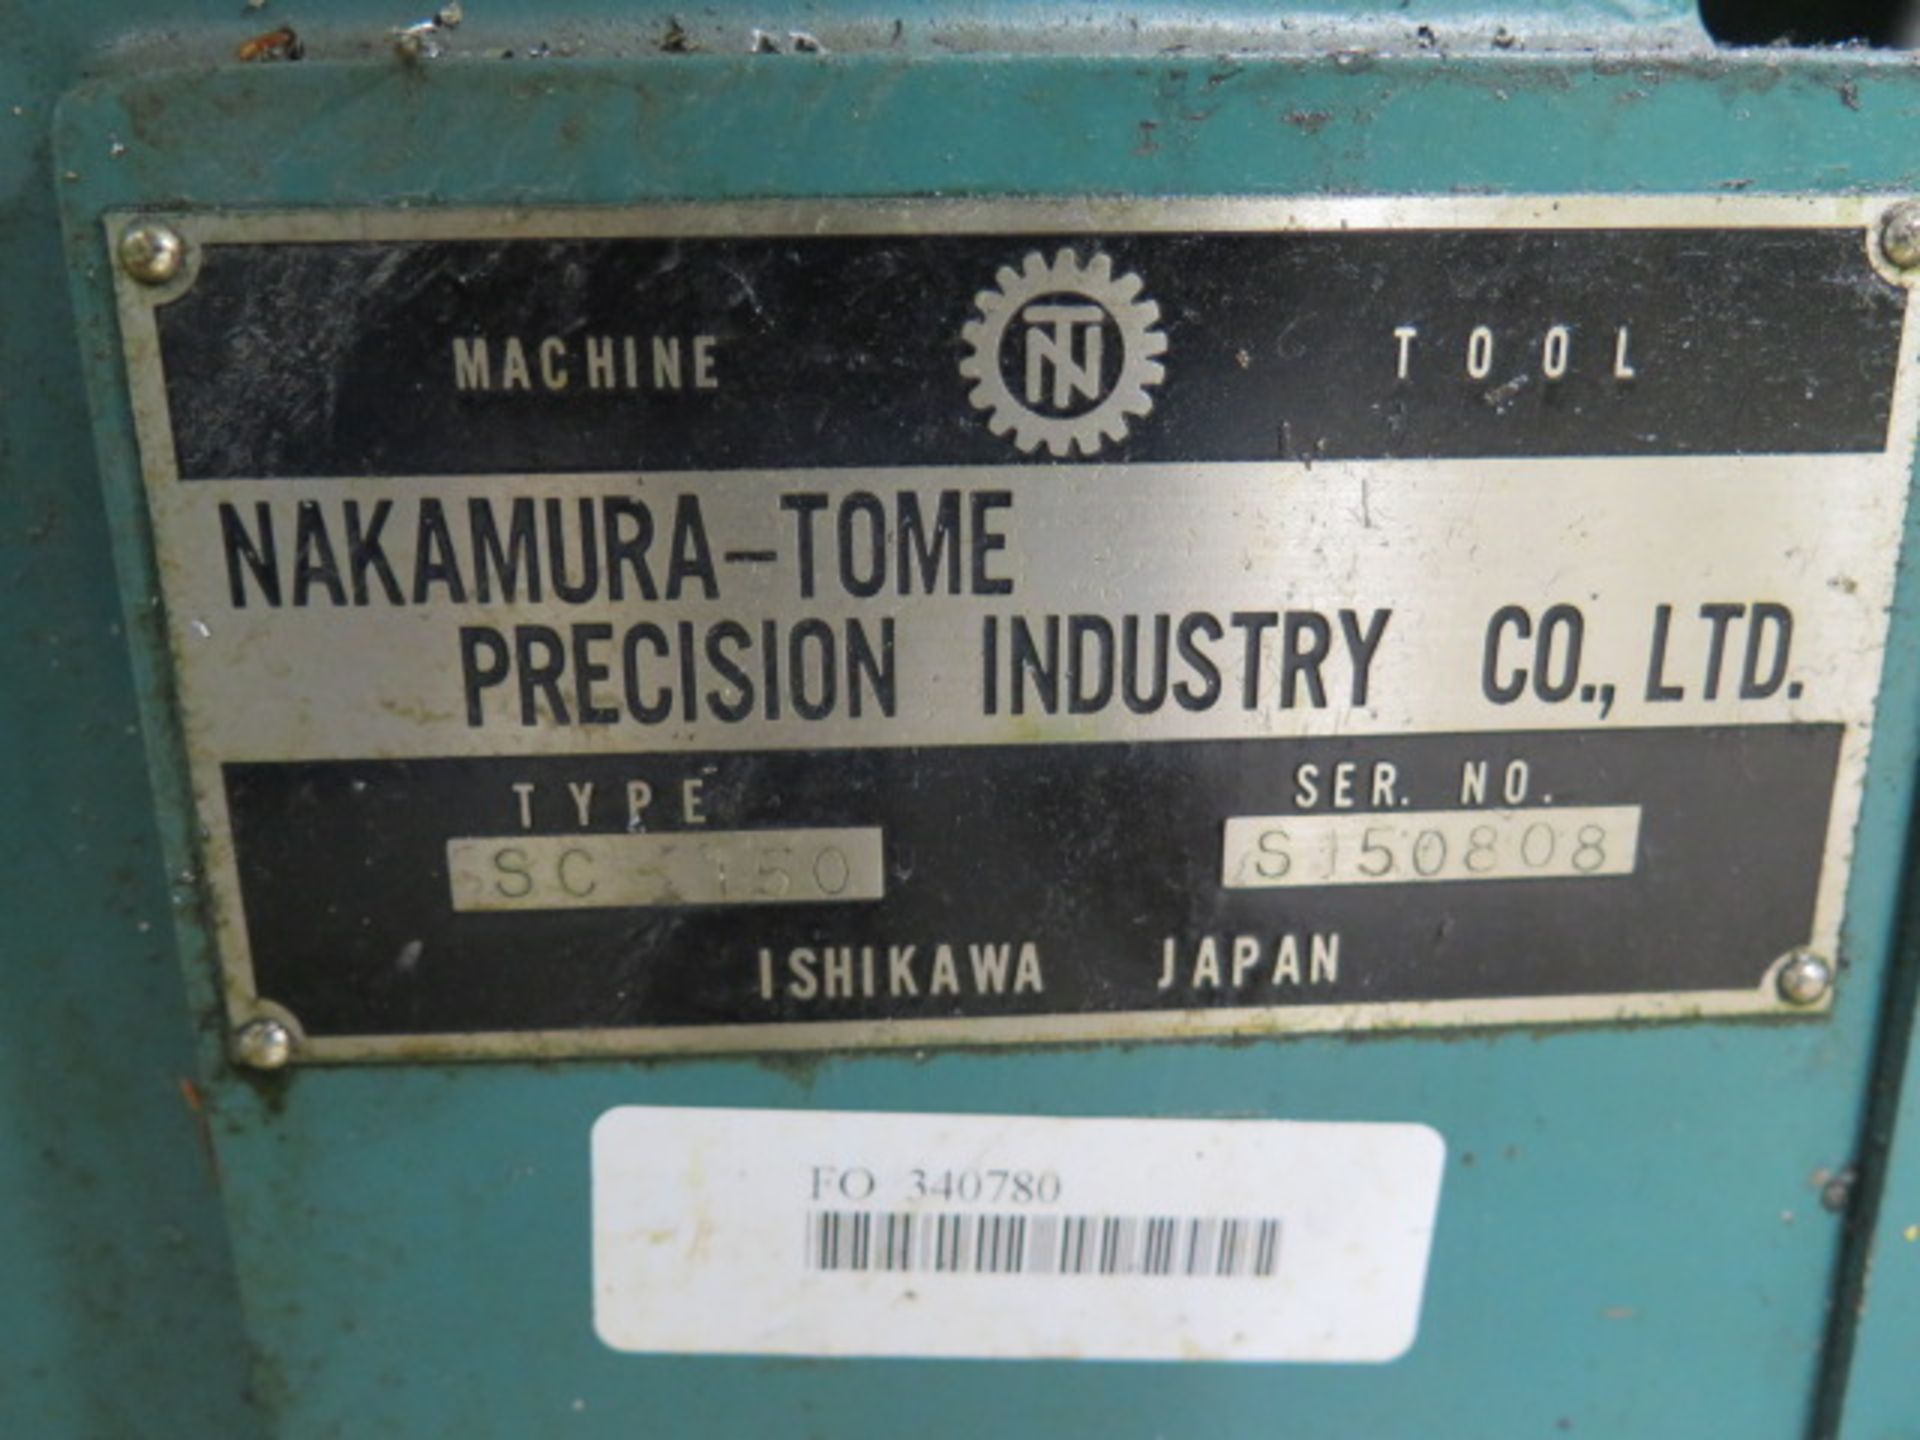 Nakamura-Tone SC-150 CNC Turning Center s/n S150808 w/ Fanuc Series 21i-T Controls, 12-Station Turre - Image 14 of 14